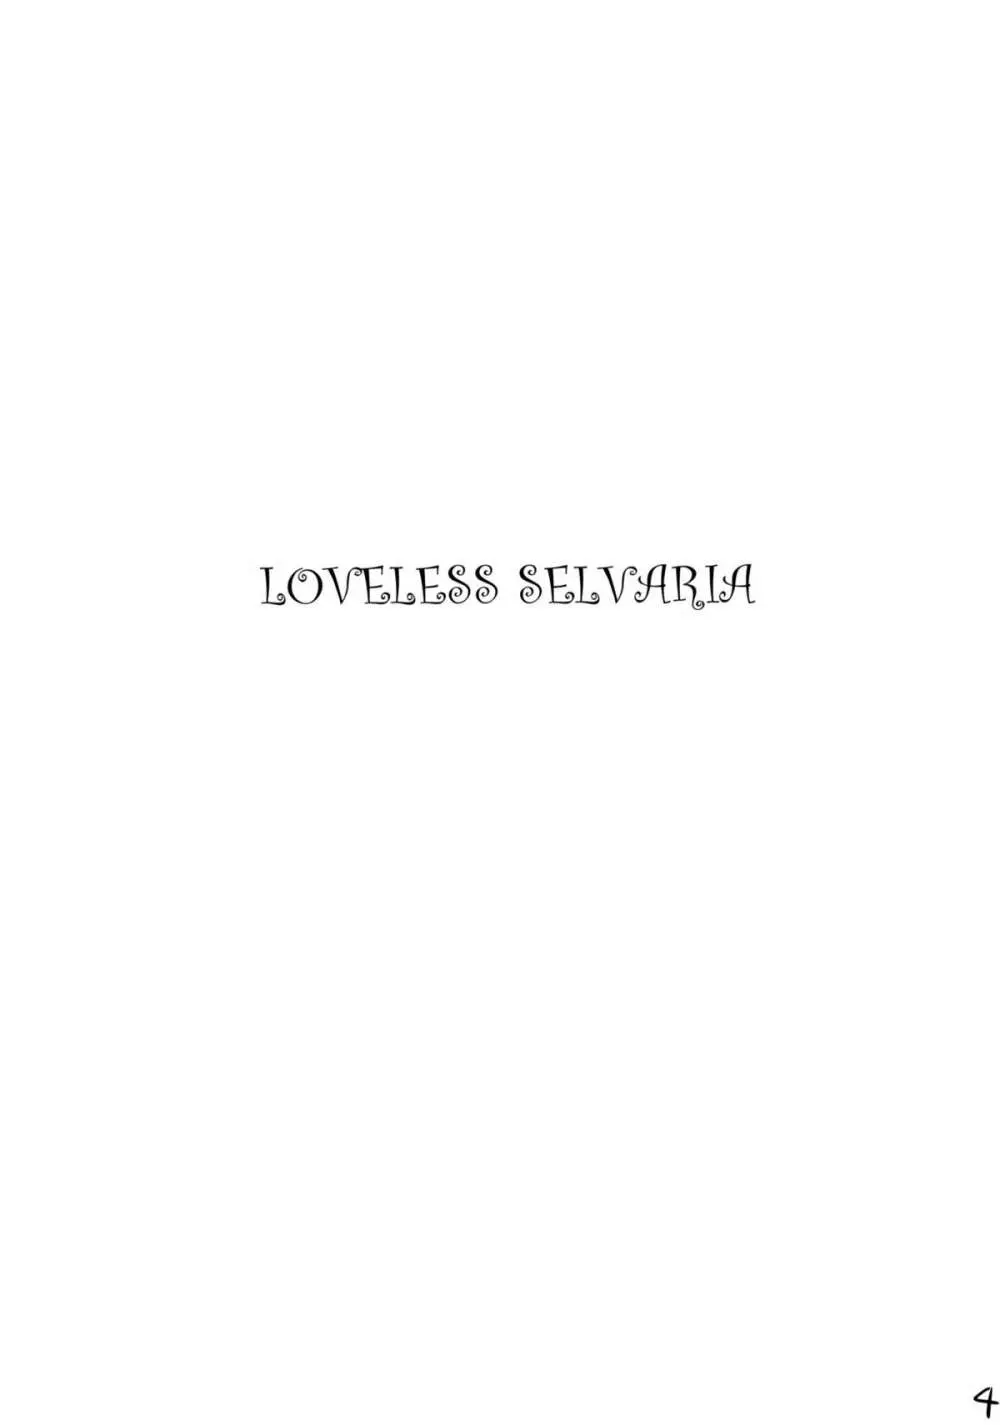 LOVELESS SELVARIA - page3